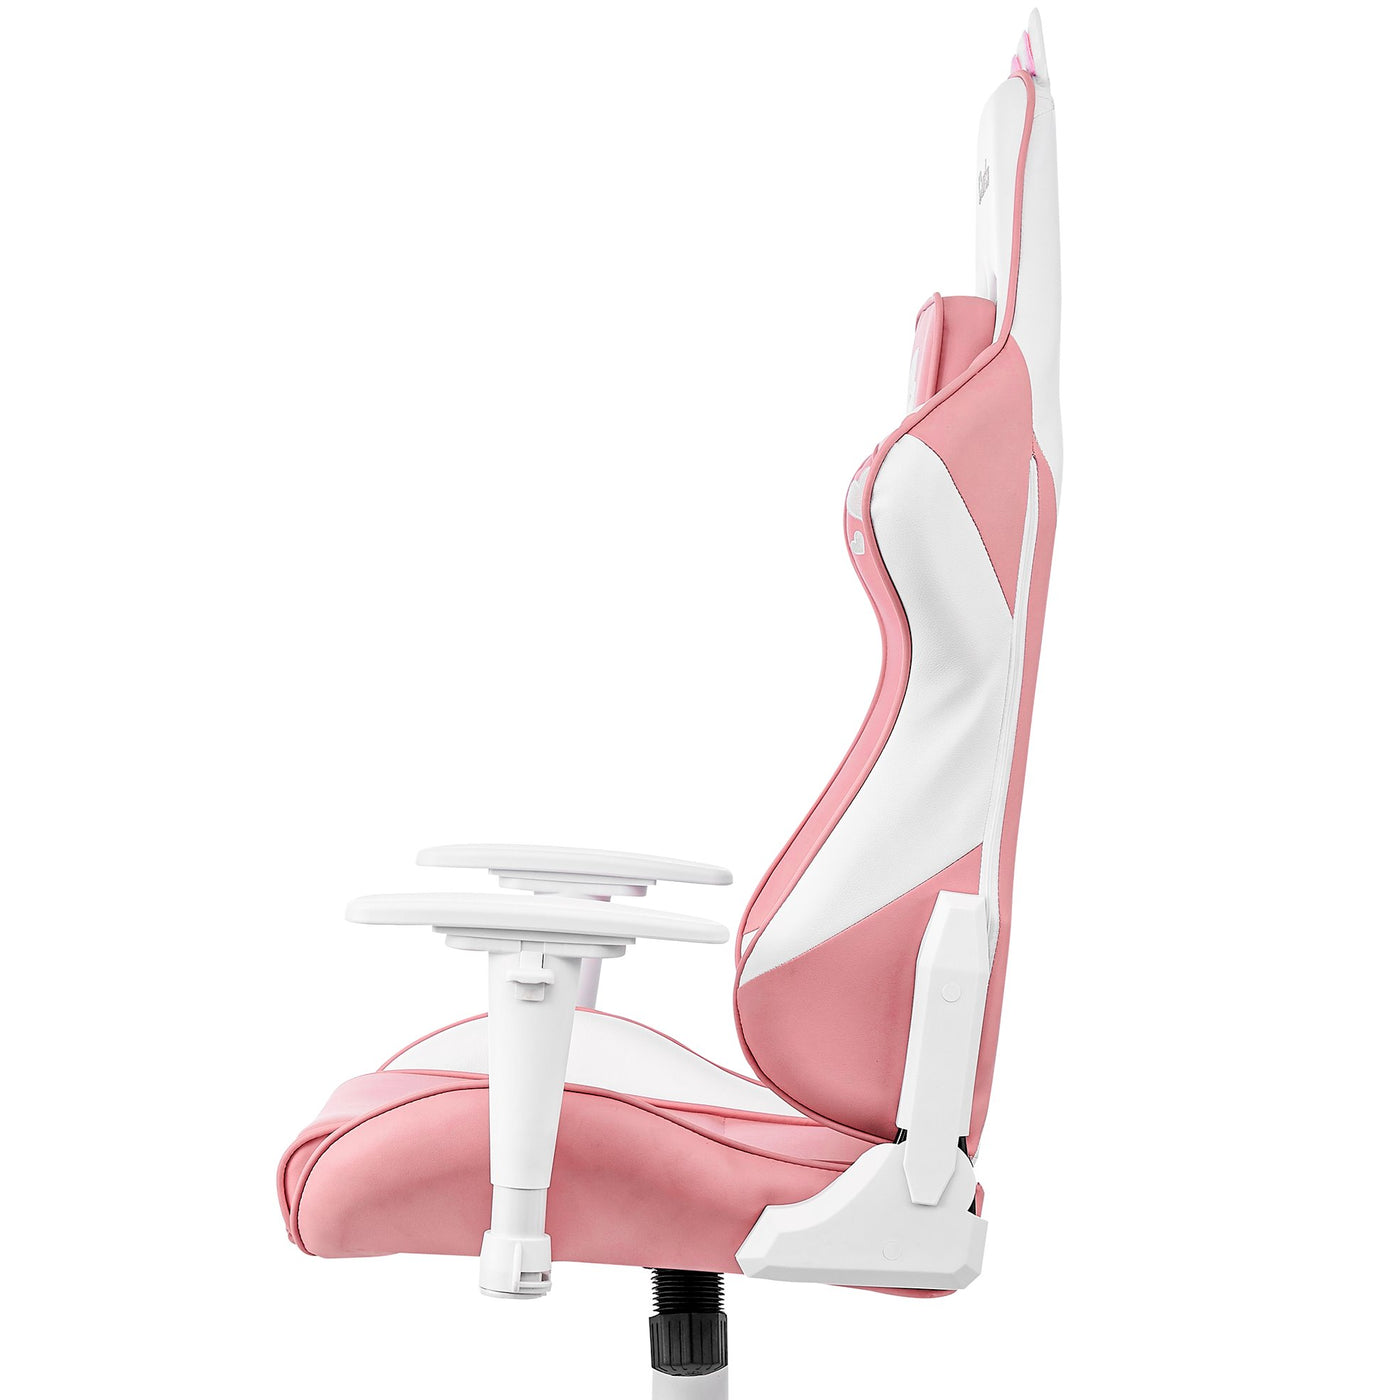 Cat Girl Kawaii Chair- (SM-MD) Gaming Chair Clutch Chairz 